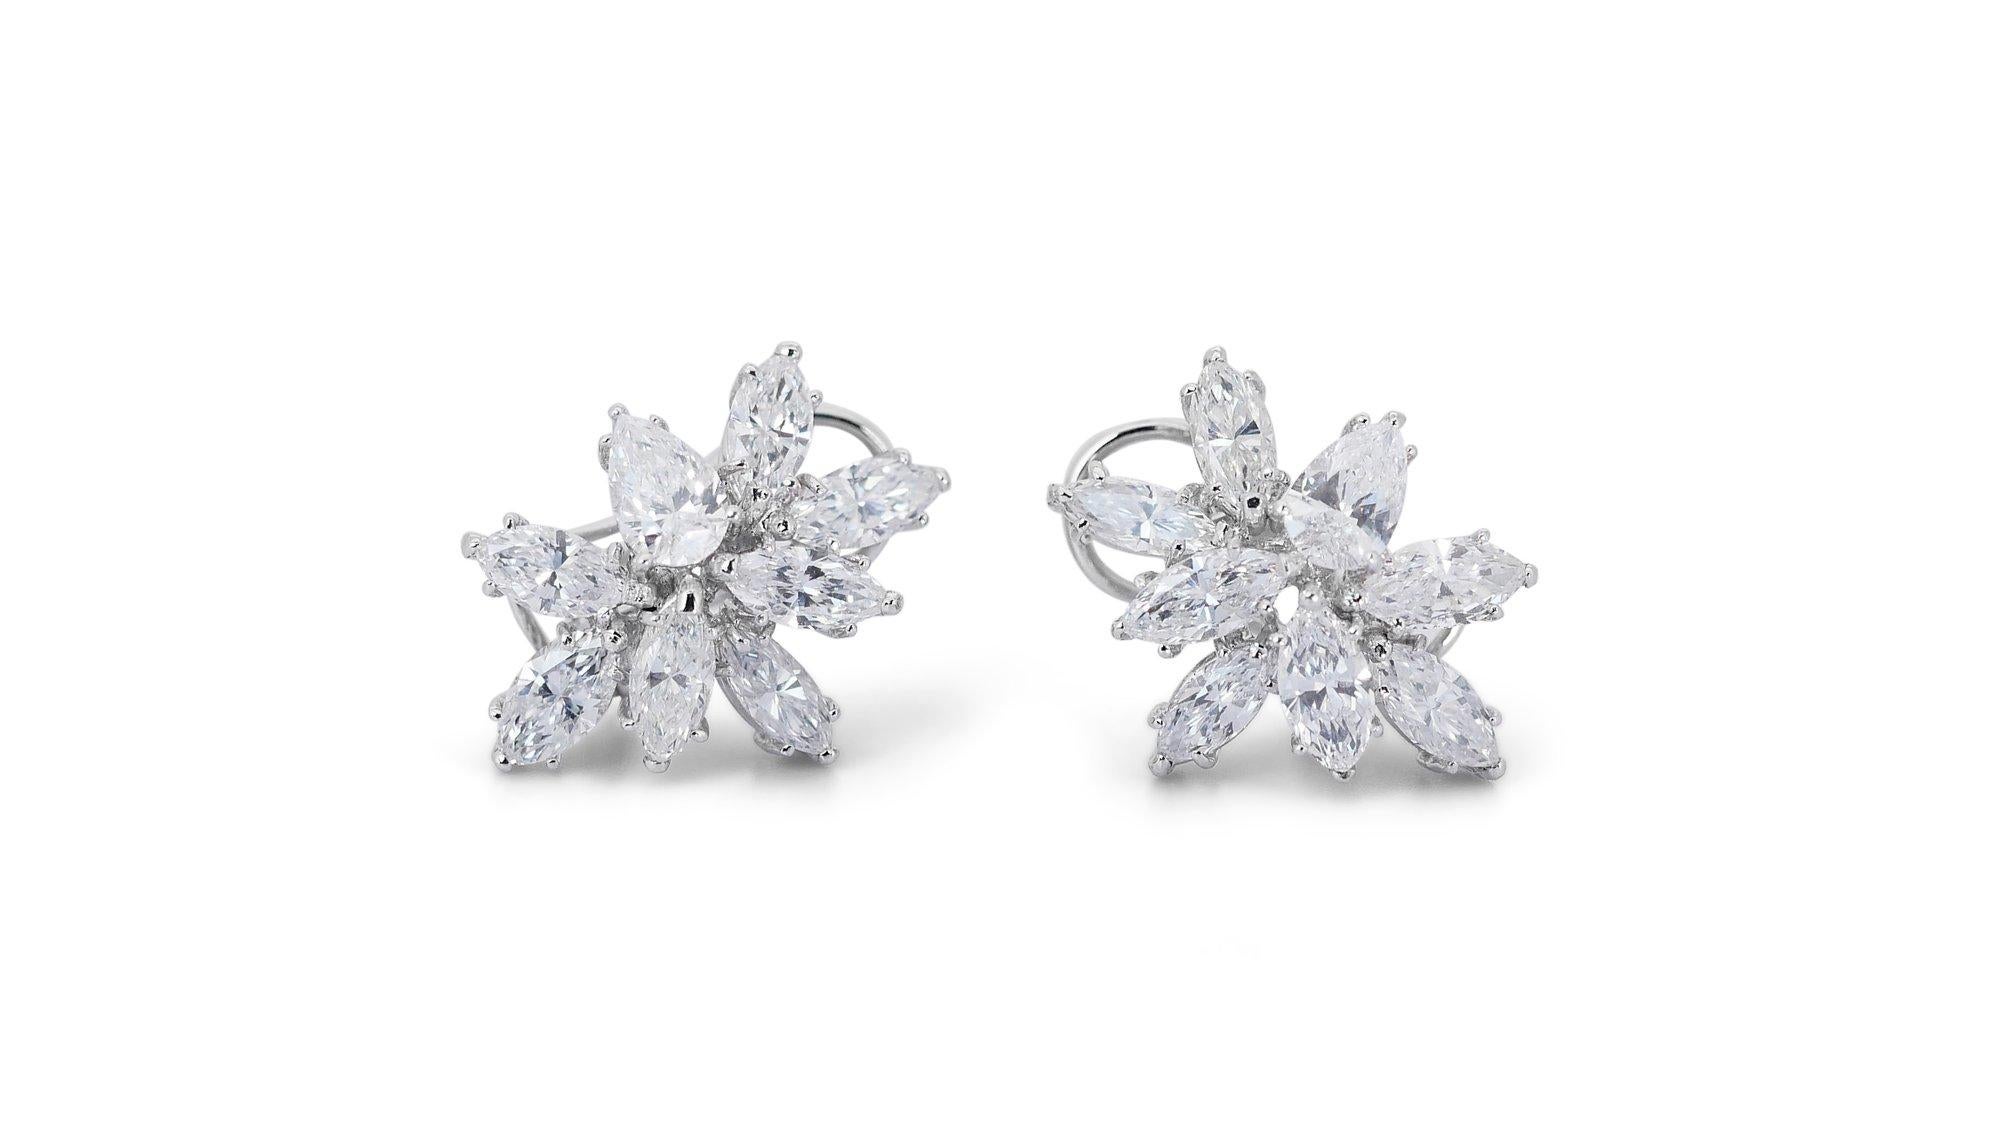 Pear Cut 18 kt. White Gold Diamond Earrings with 6 ct Total Natural Diamonds - IGI Cert